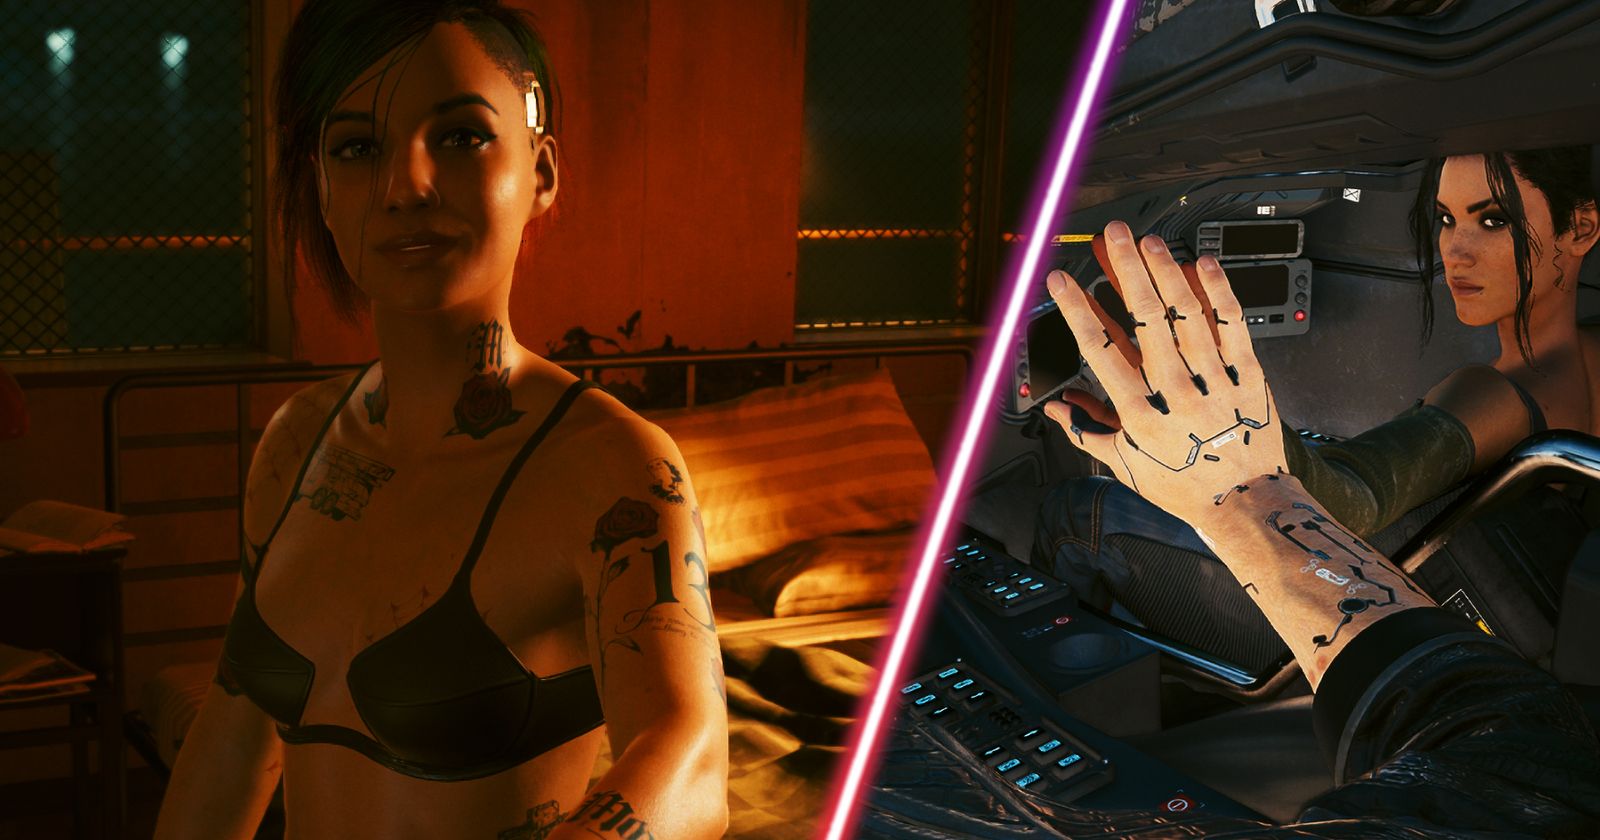 Cyberpunk 2077 - Mod lets you replay romance cutscenes